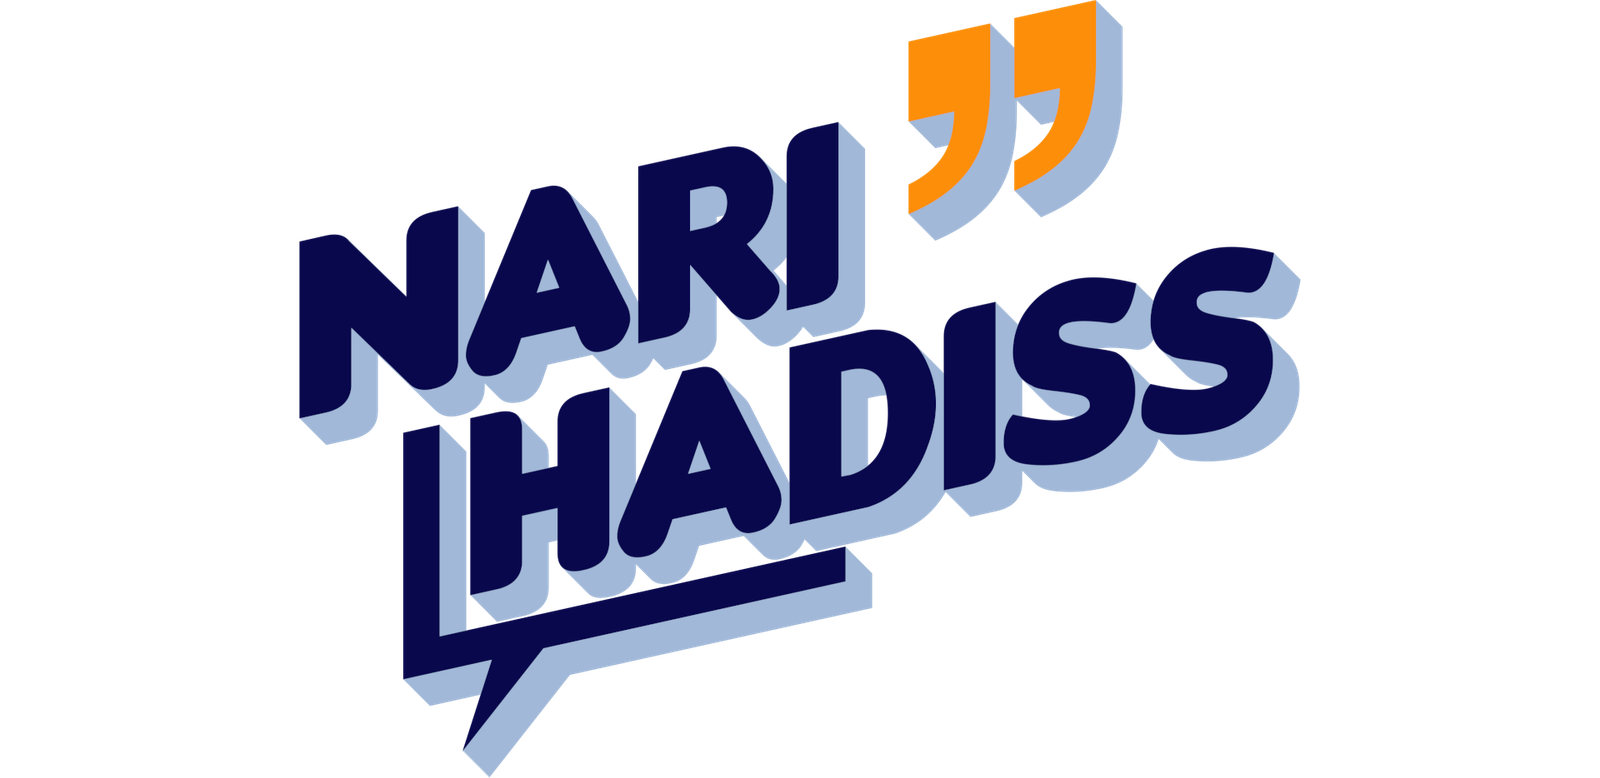 Nari Hadiss logo _